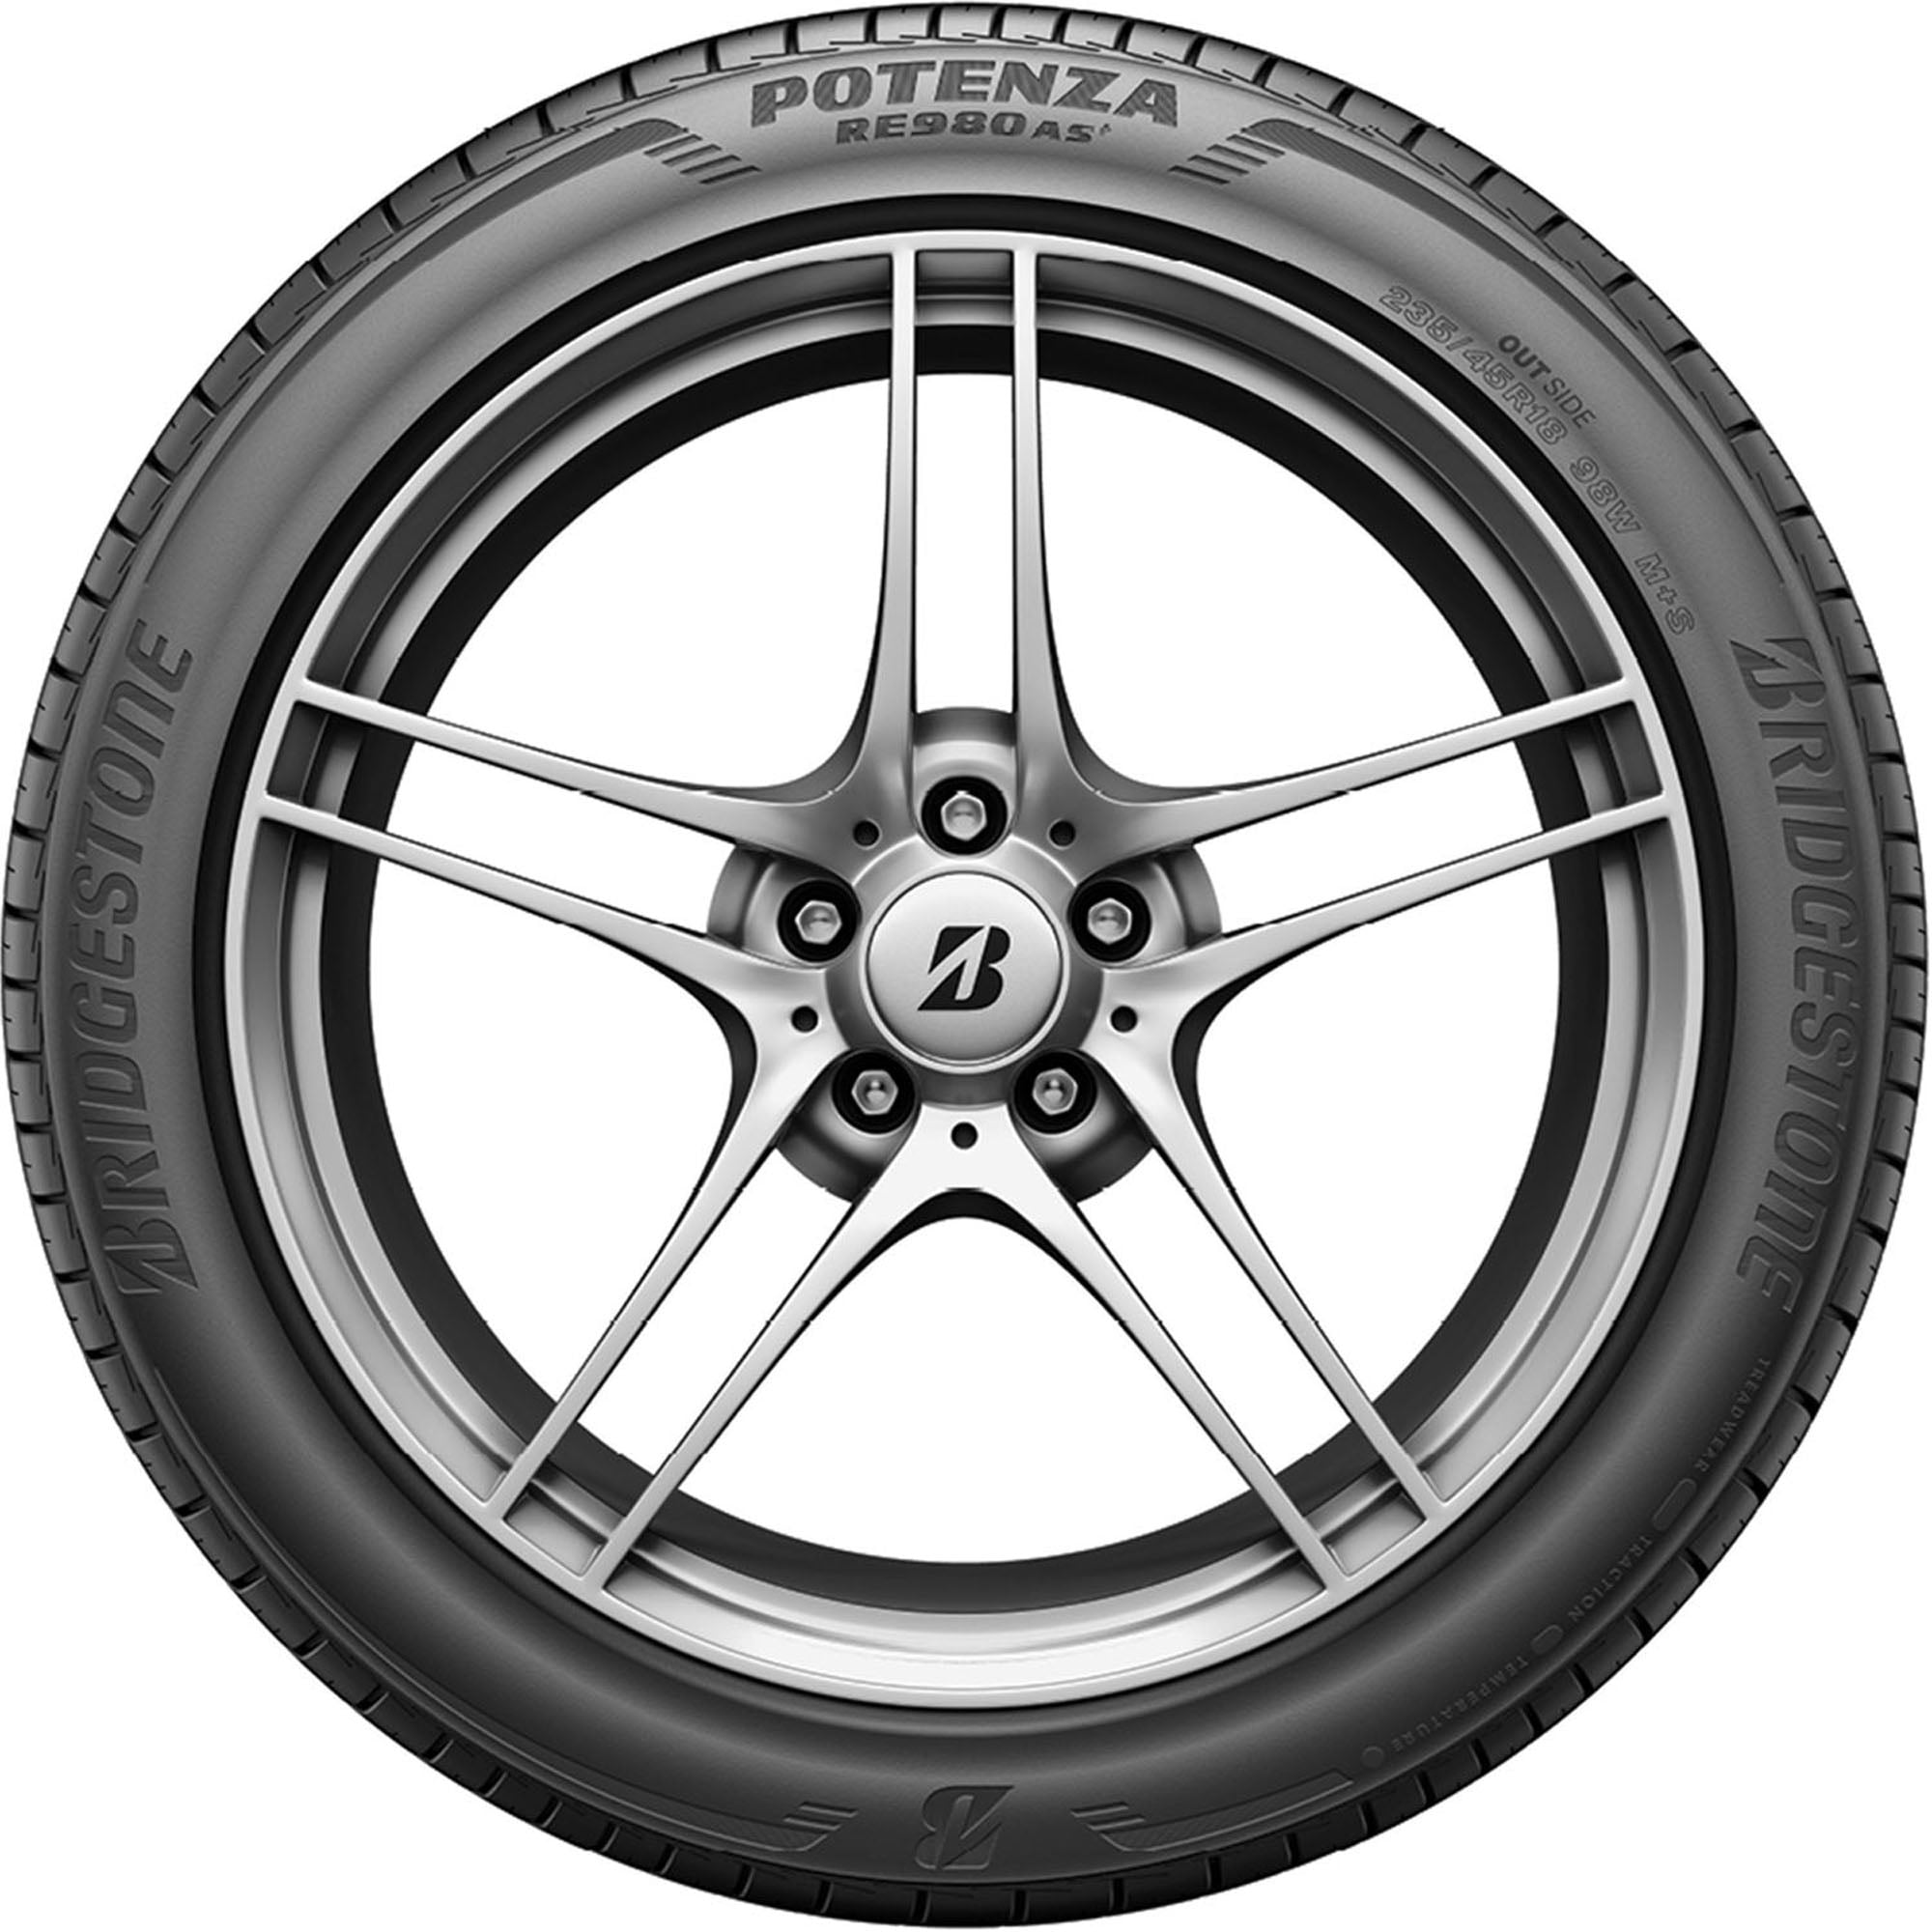 Bridgestone Potenza RE980AS+ Performance 225/45R17 94W XL Passenger Tire